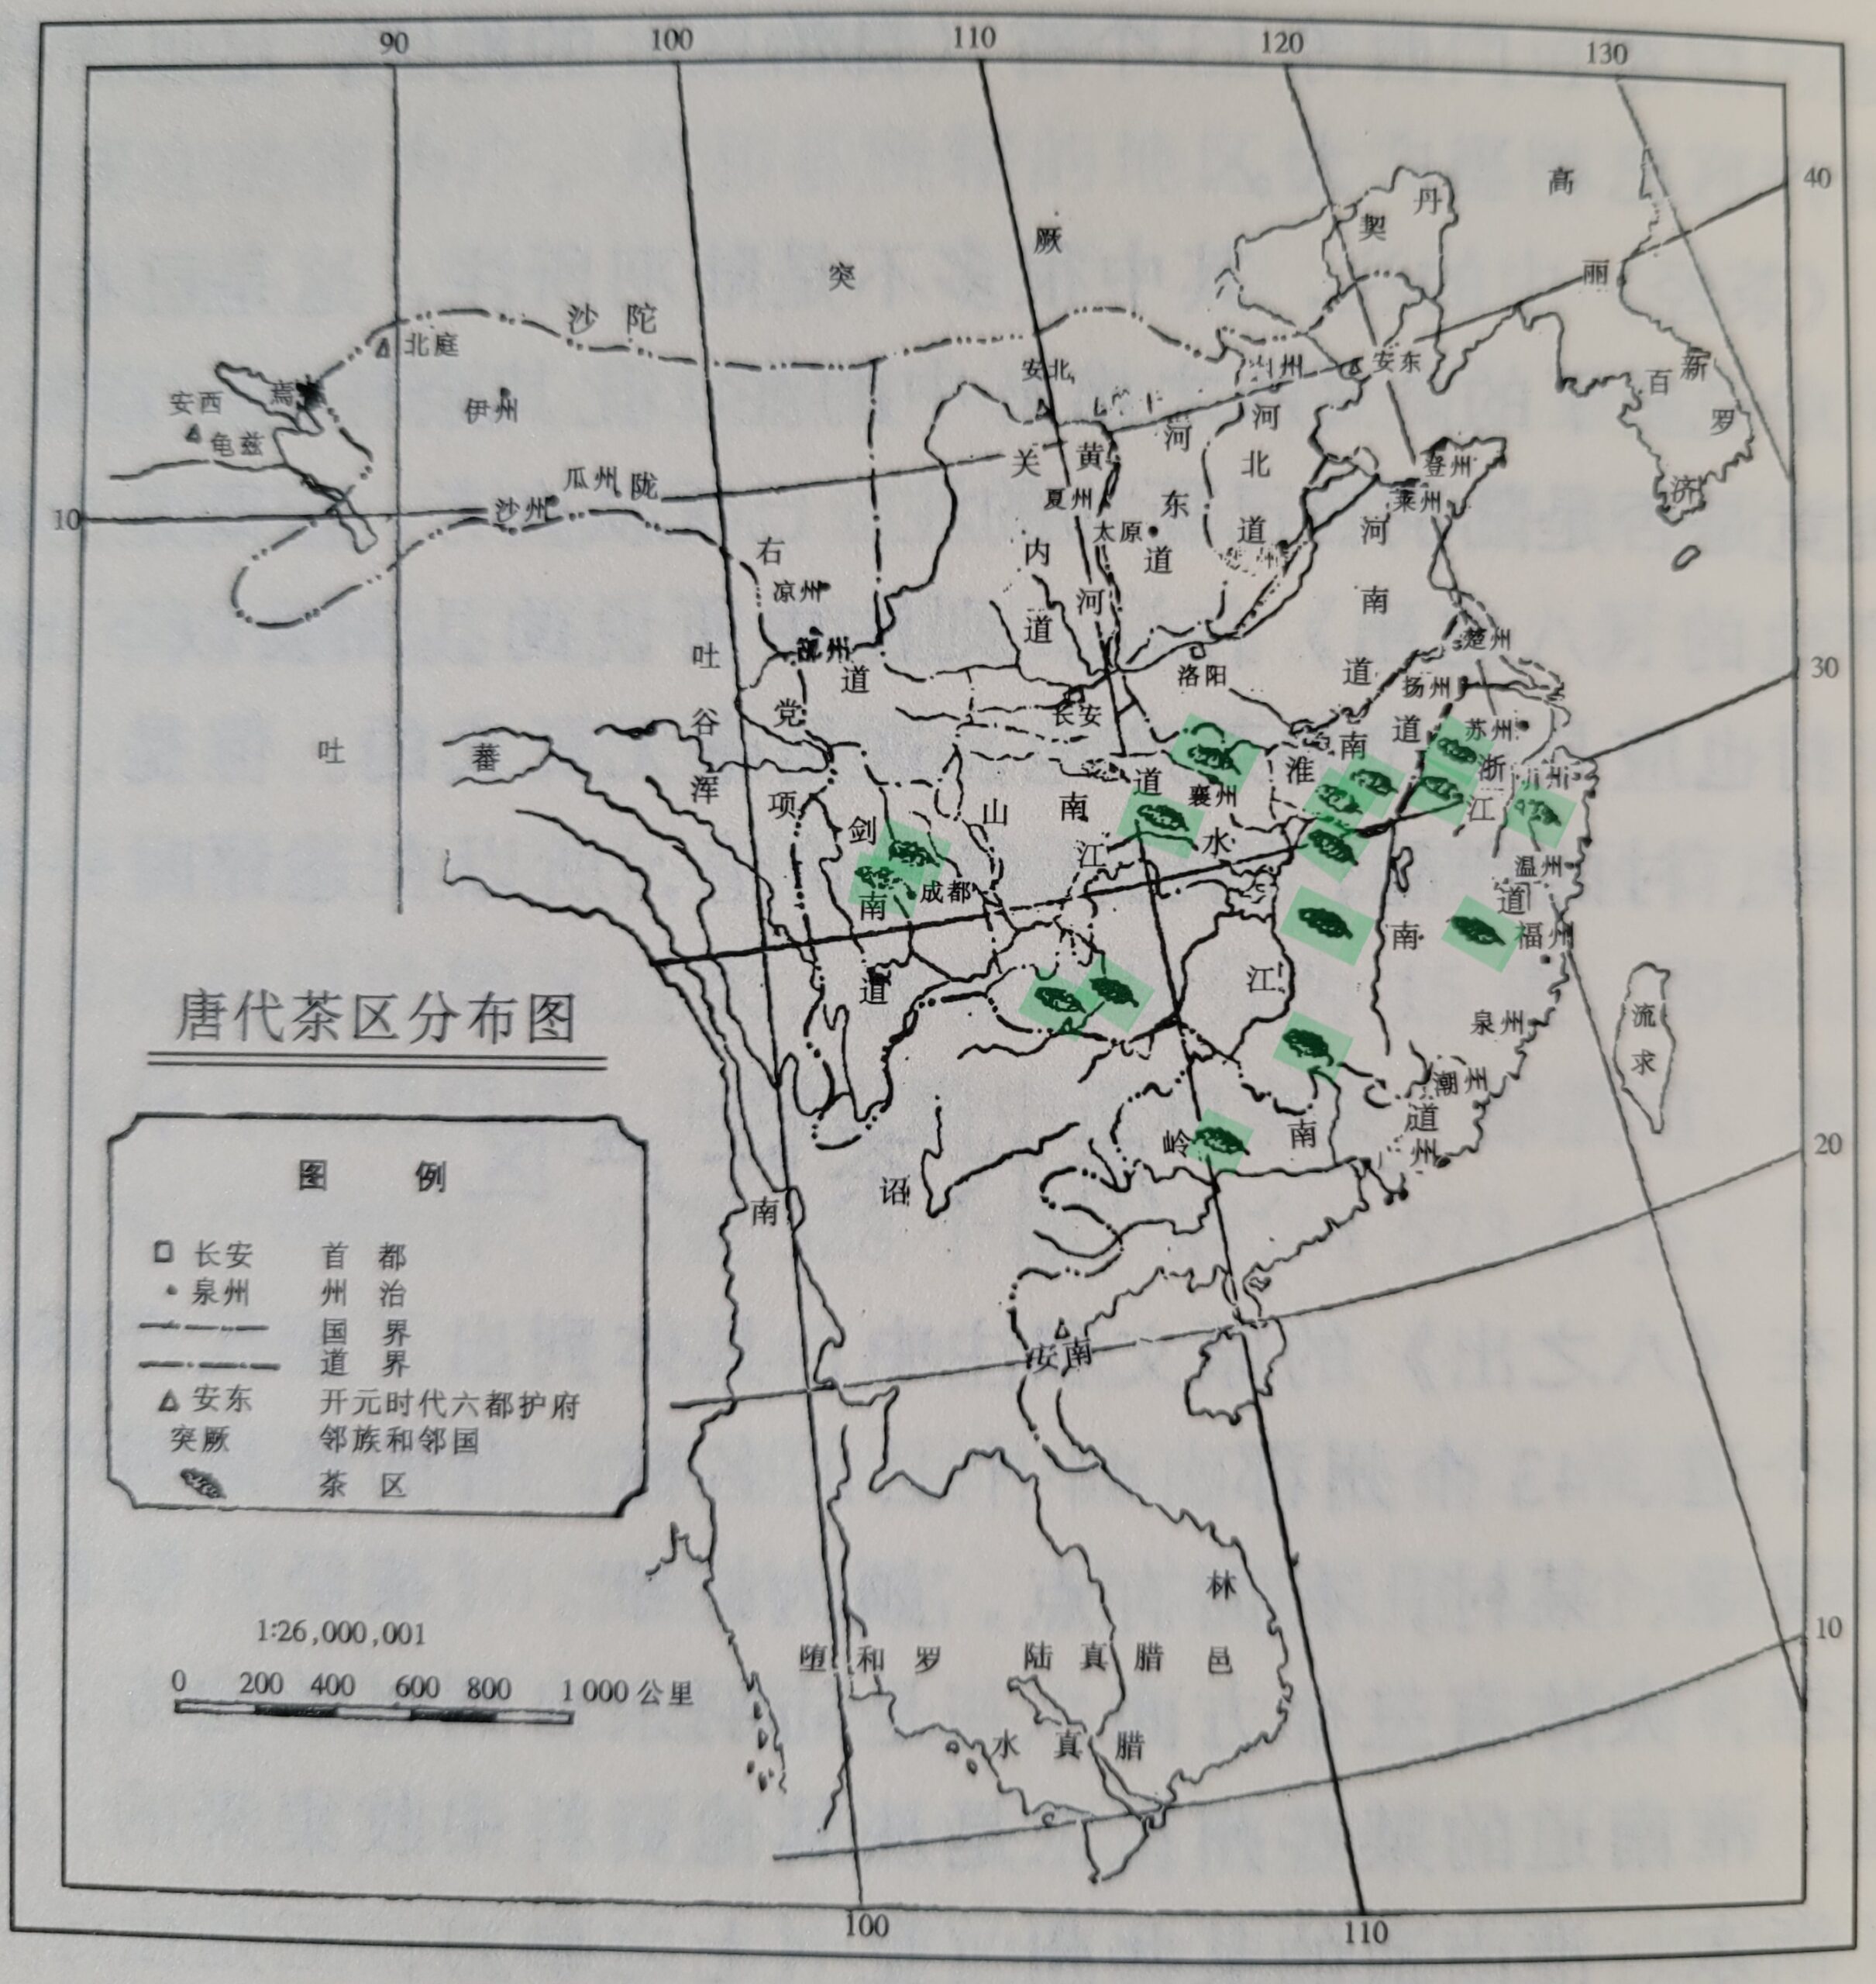 The Classic of Tea - figure 8-1 - Tang Dynasty Tea Region Map